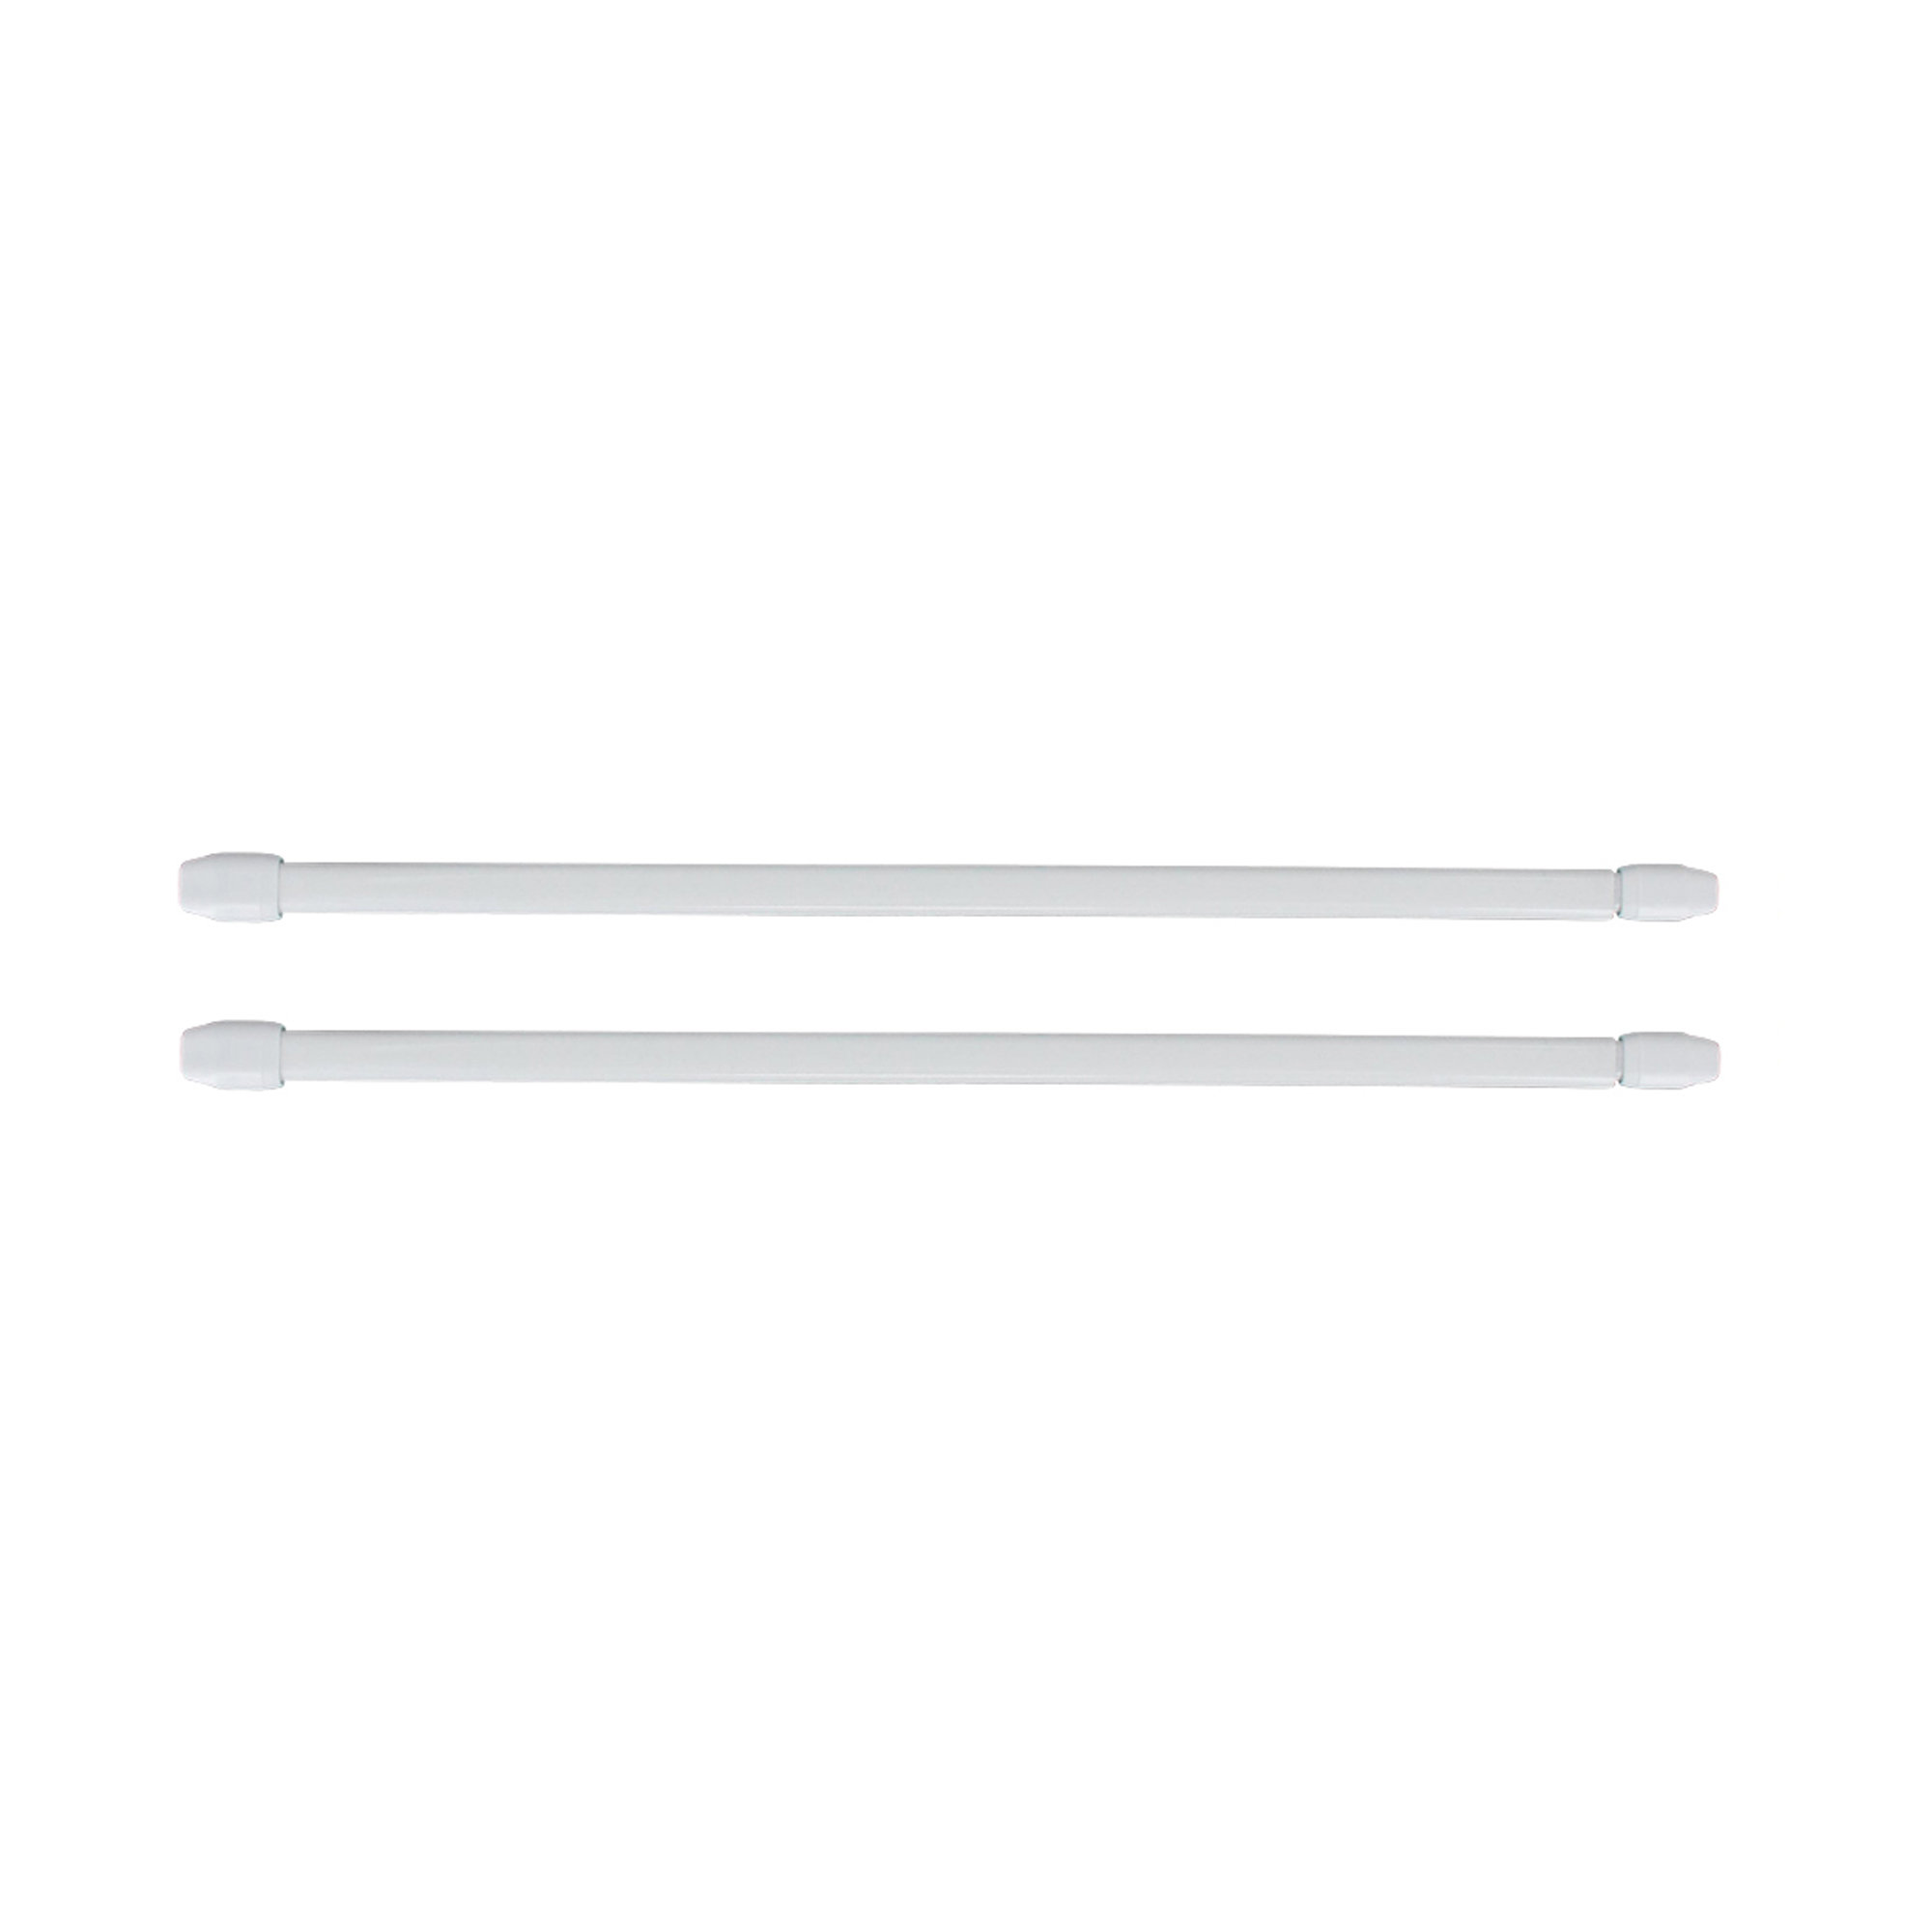 Self Adhesive Hooks Sash Rod Set of 4 - White